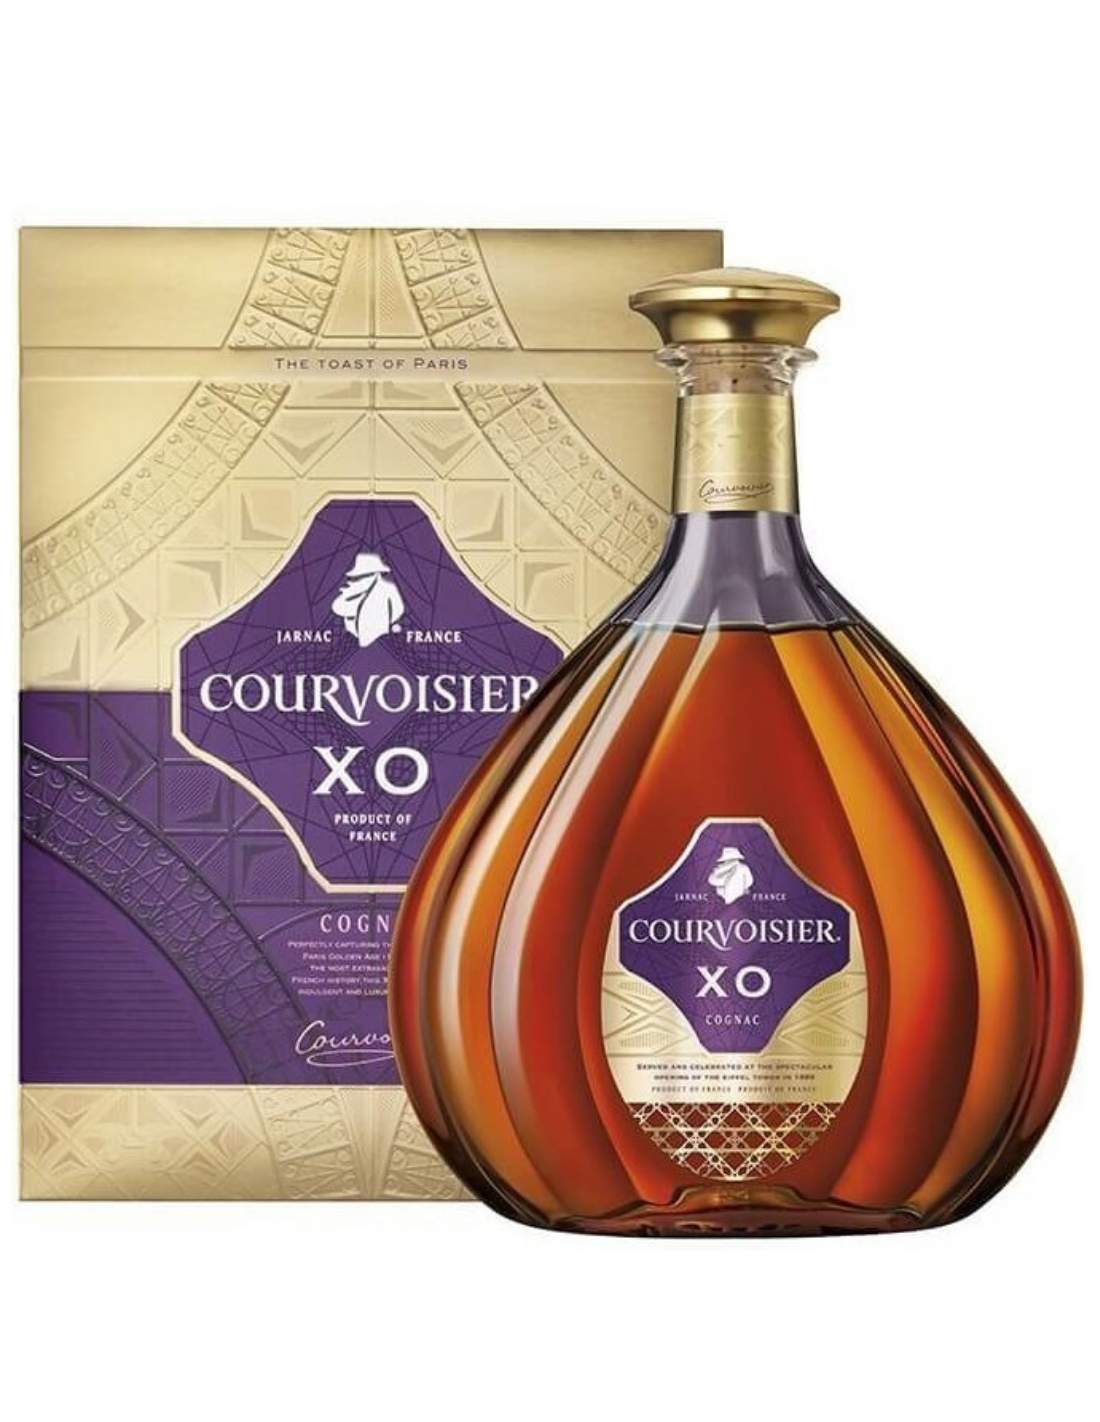 Coniac Courvoisier XO, 40% alc., 0.7L, Franta alcooldiscount.ro